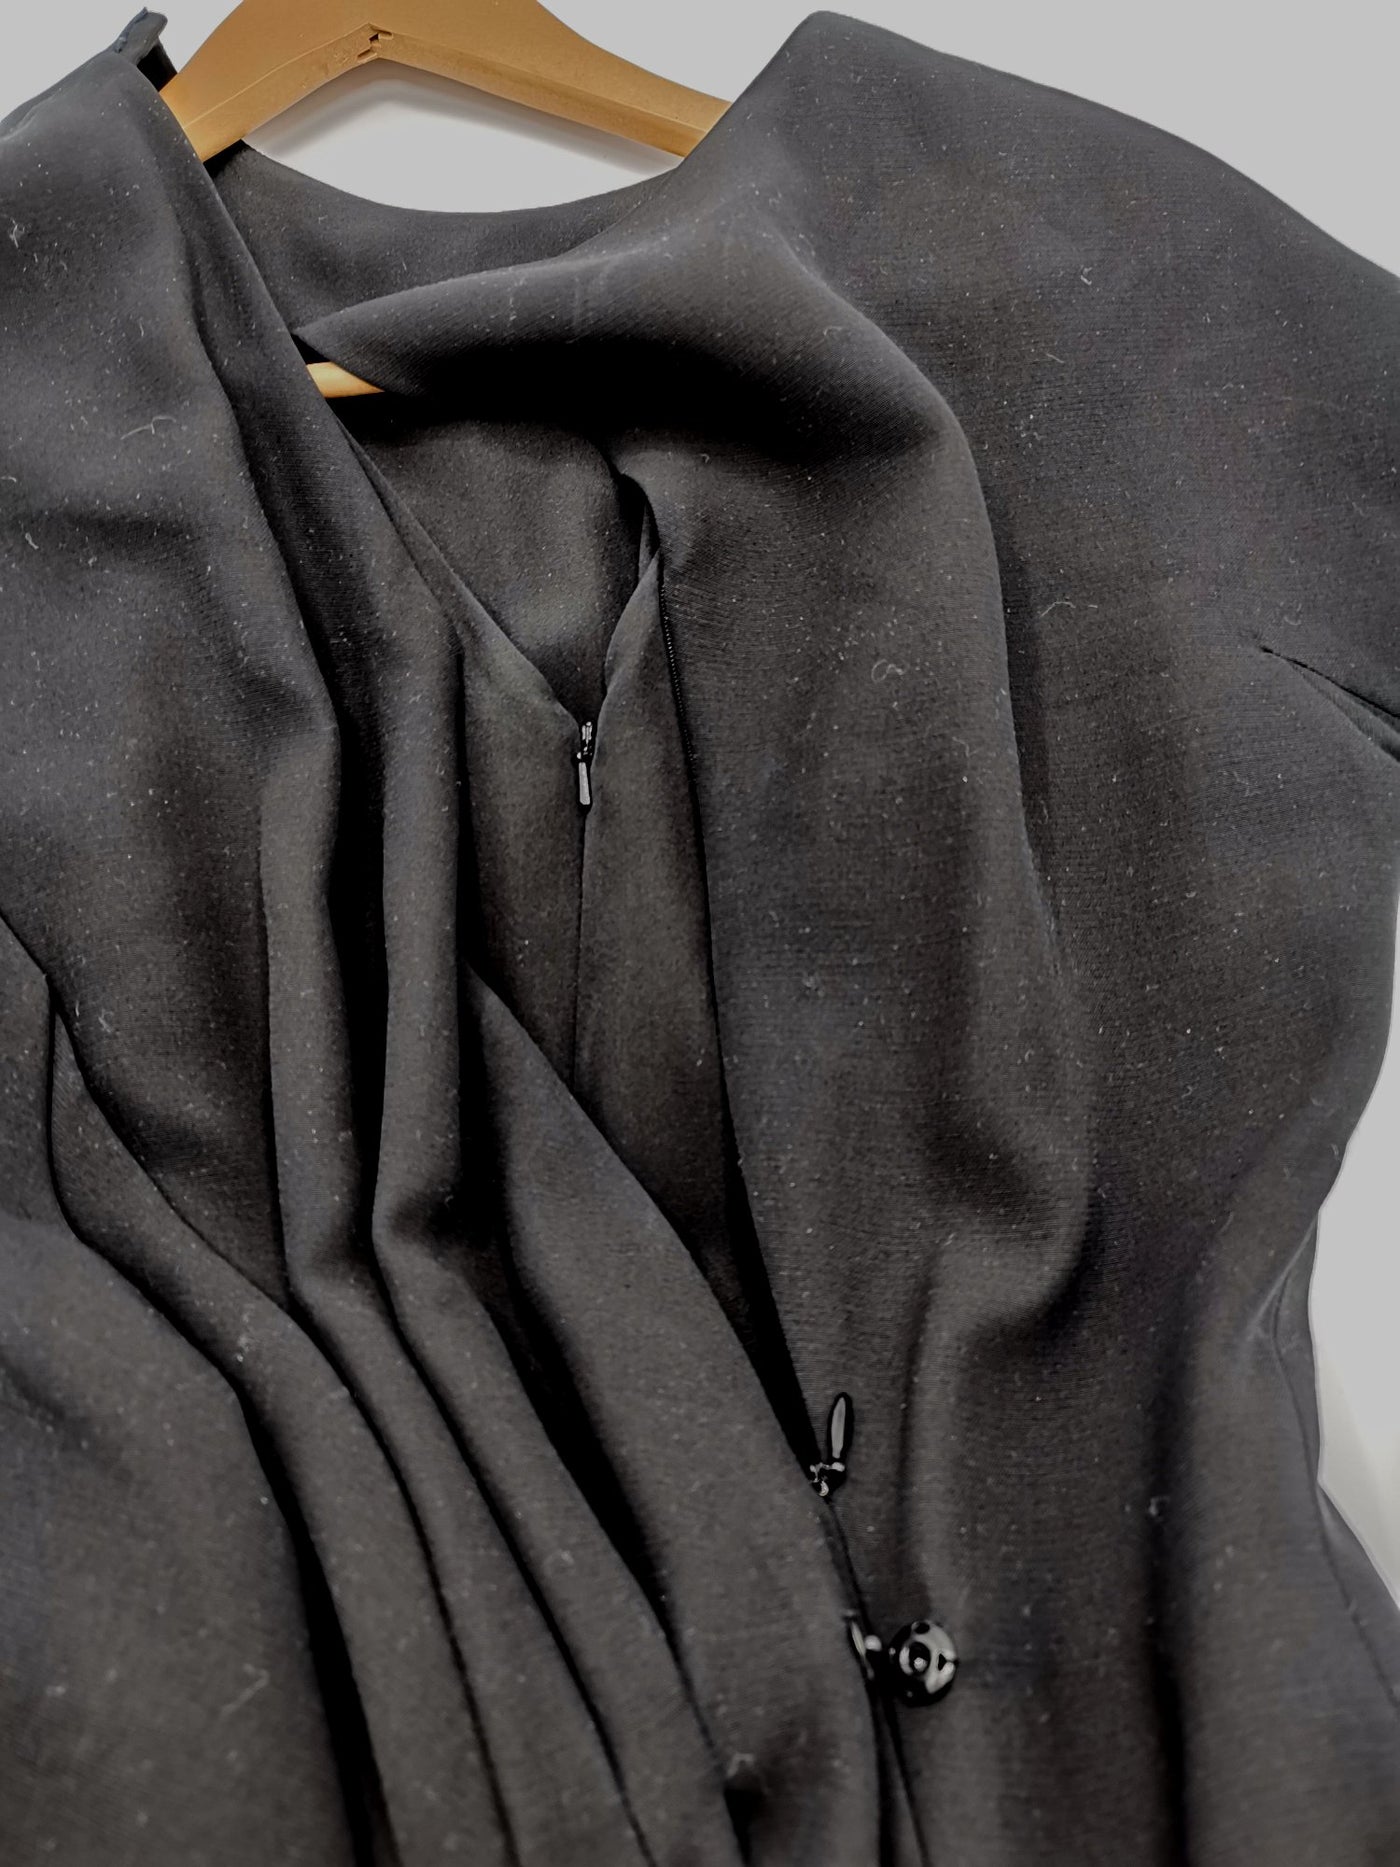 Christian Dior black peplum dress with panel size uk14